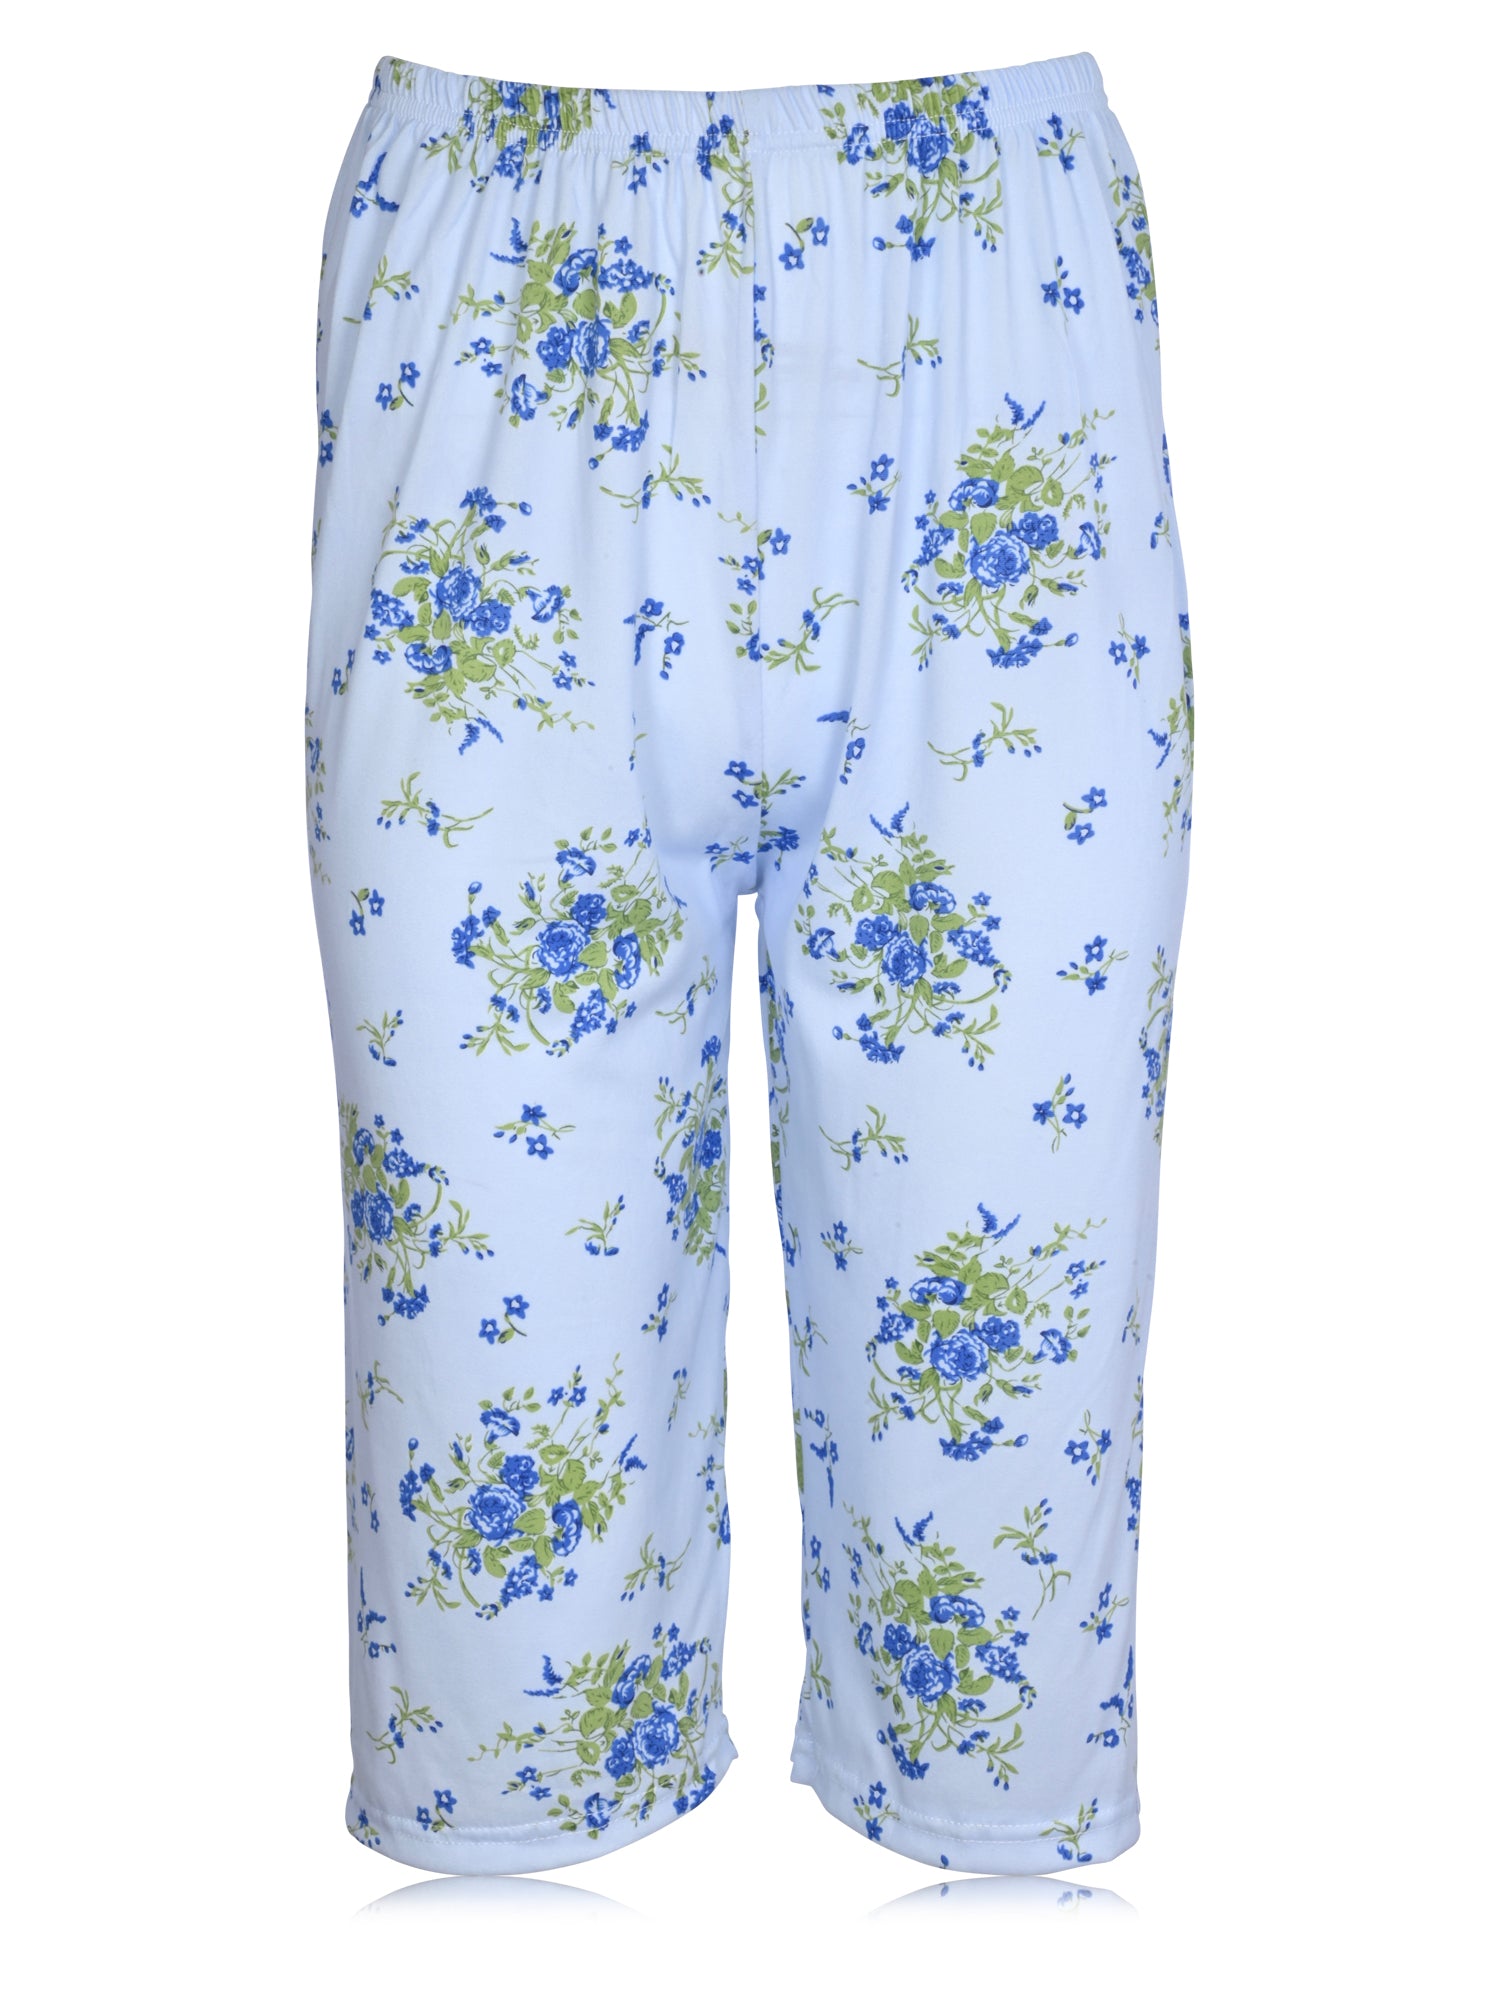 JUNZAN Star Gold Blue White Long Pajama Pants For Women Nightwear